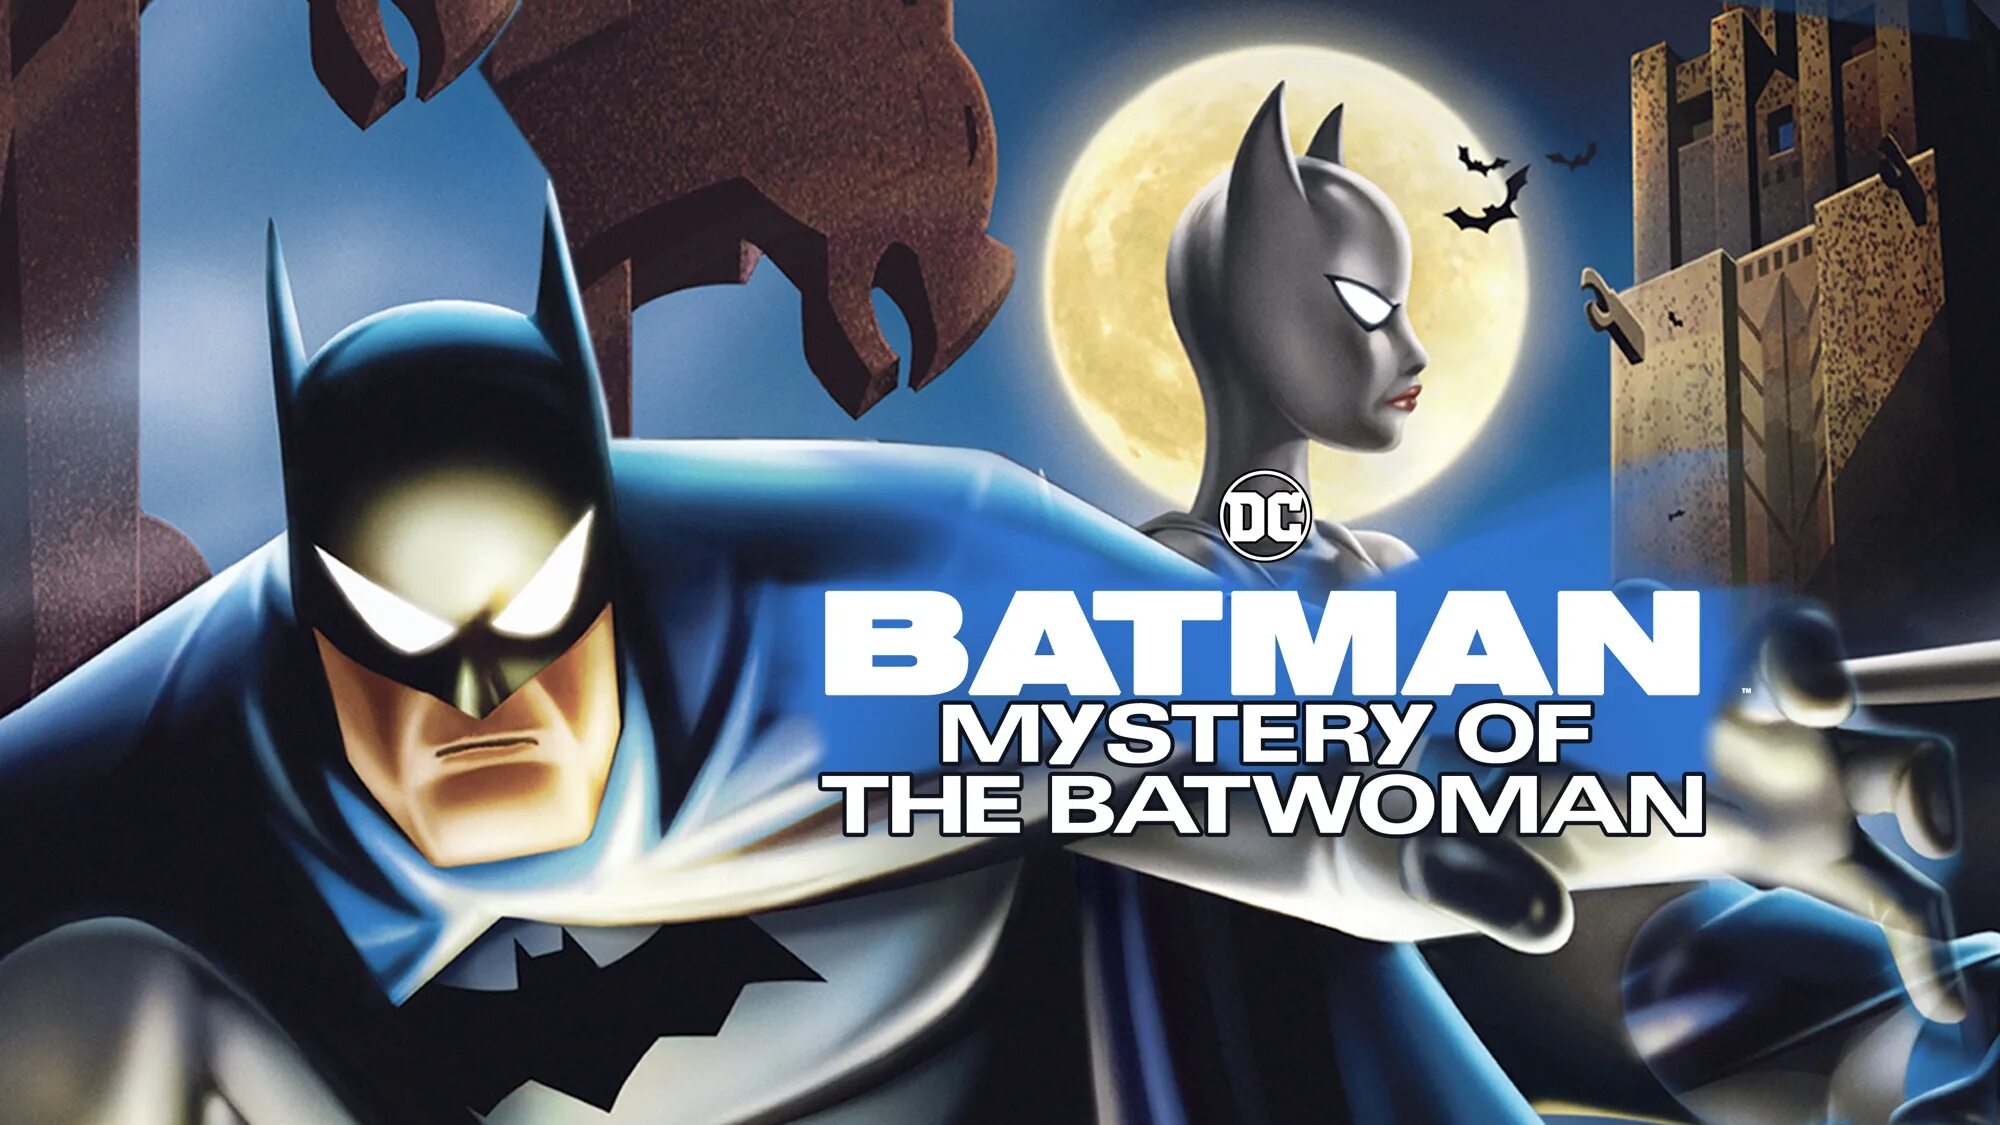 Бэтмен и тайна женщины-летучей мыши (2003). Бэтмен тайна Бэтвумен. Бэтмен 2003 Бэтвумен. Batman mystery